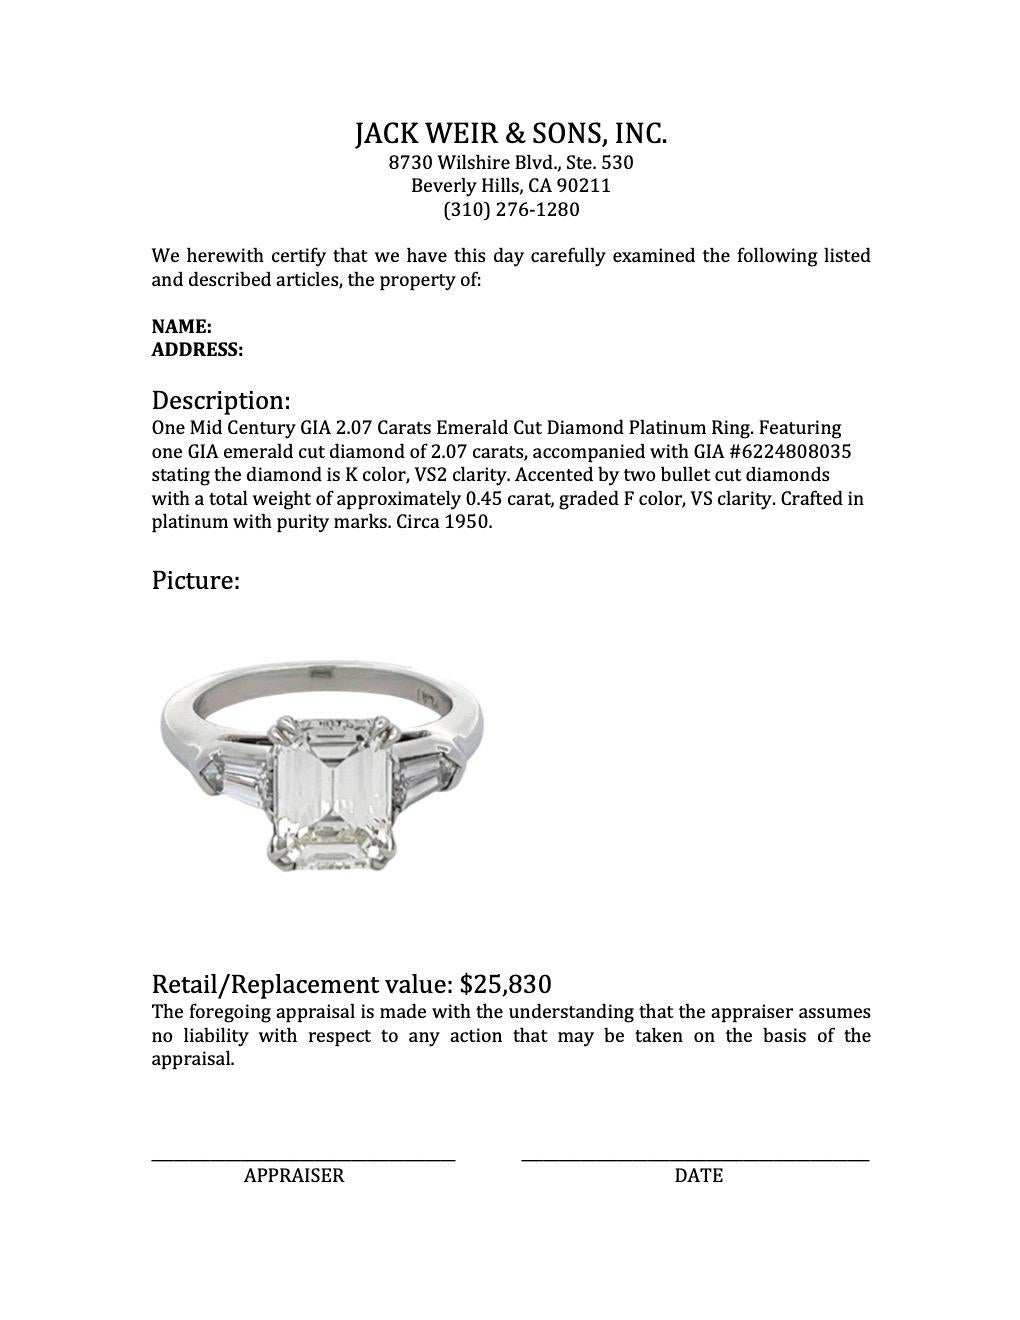 Midcentury GIA 2.07 Carats Emerald Cut Diamond Platinum Ring For Sale 1